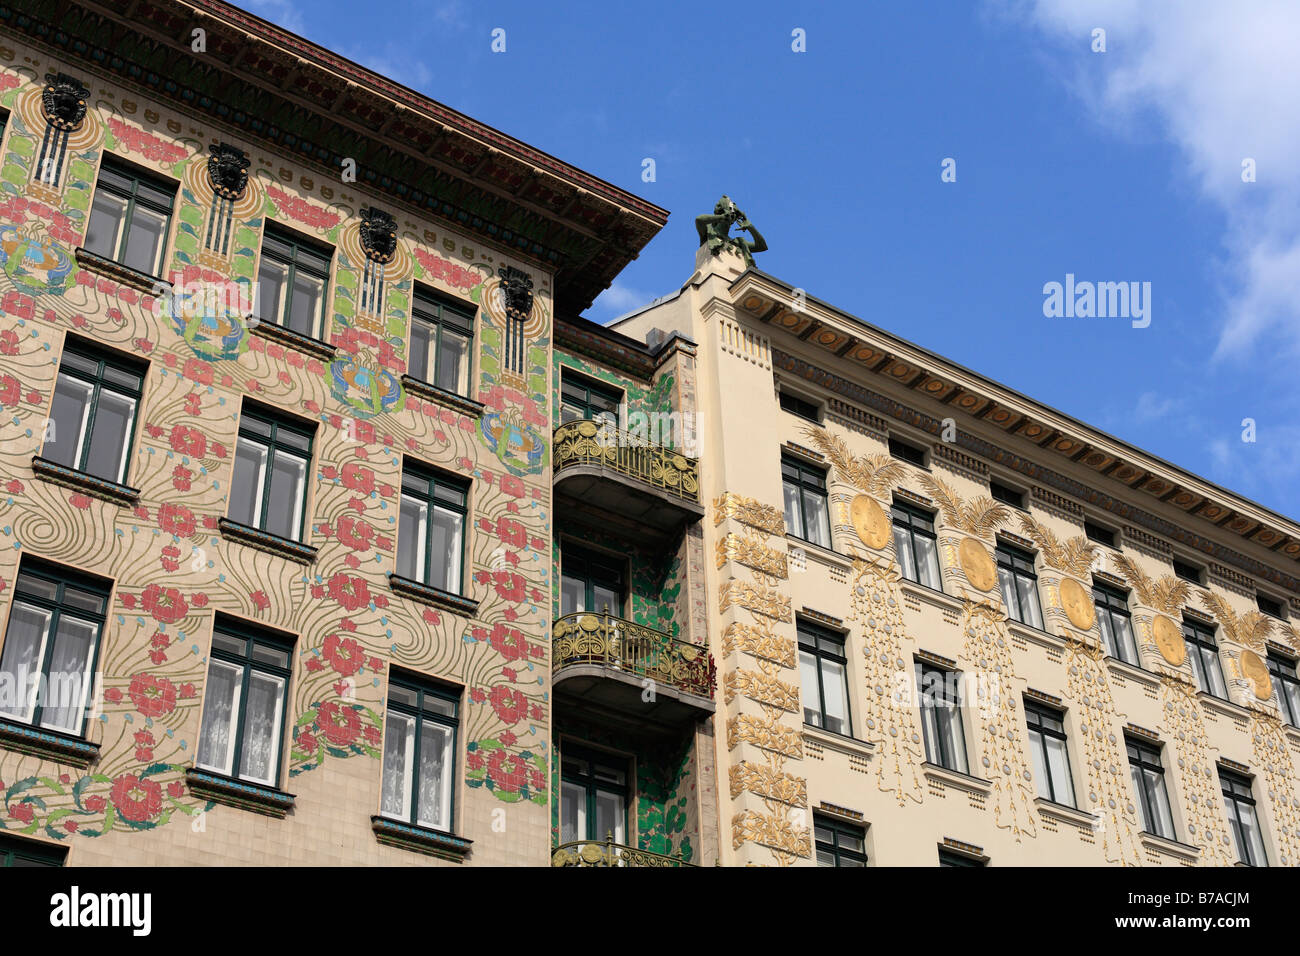 Majolikahaus, left, art nouveau houses on Linke Weinzeile No 38 and 30, Vienna, Austria, Europe Stock Photo